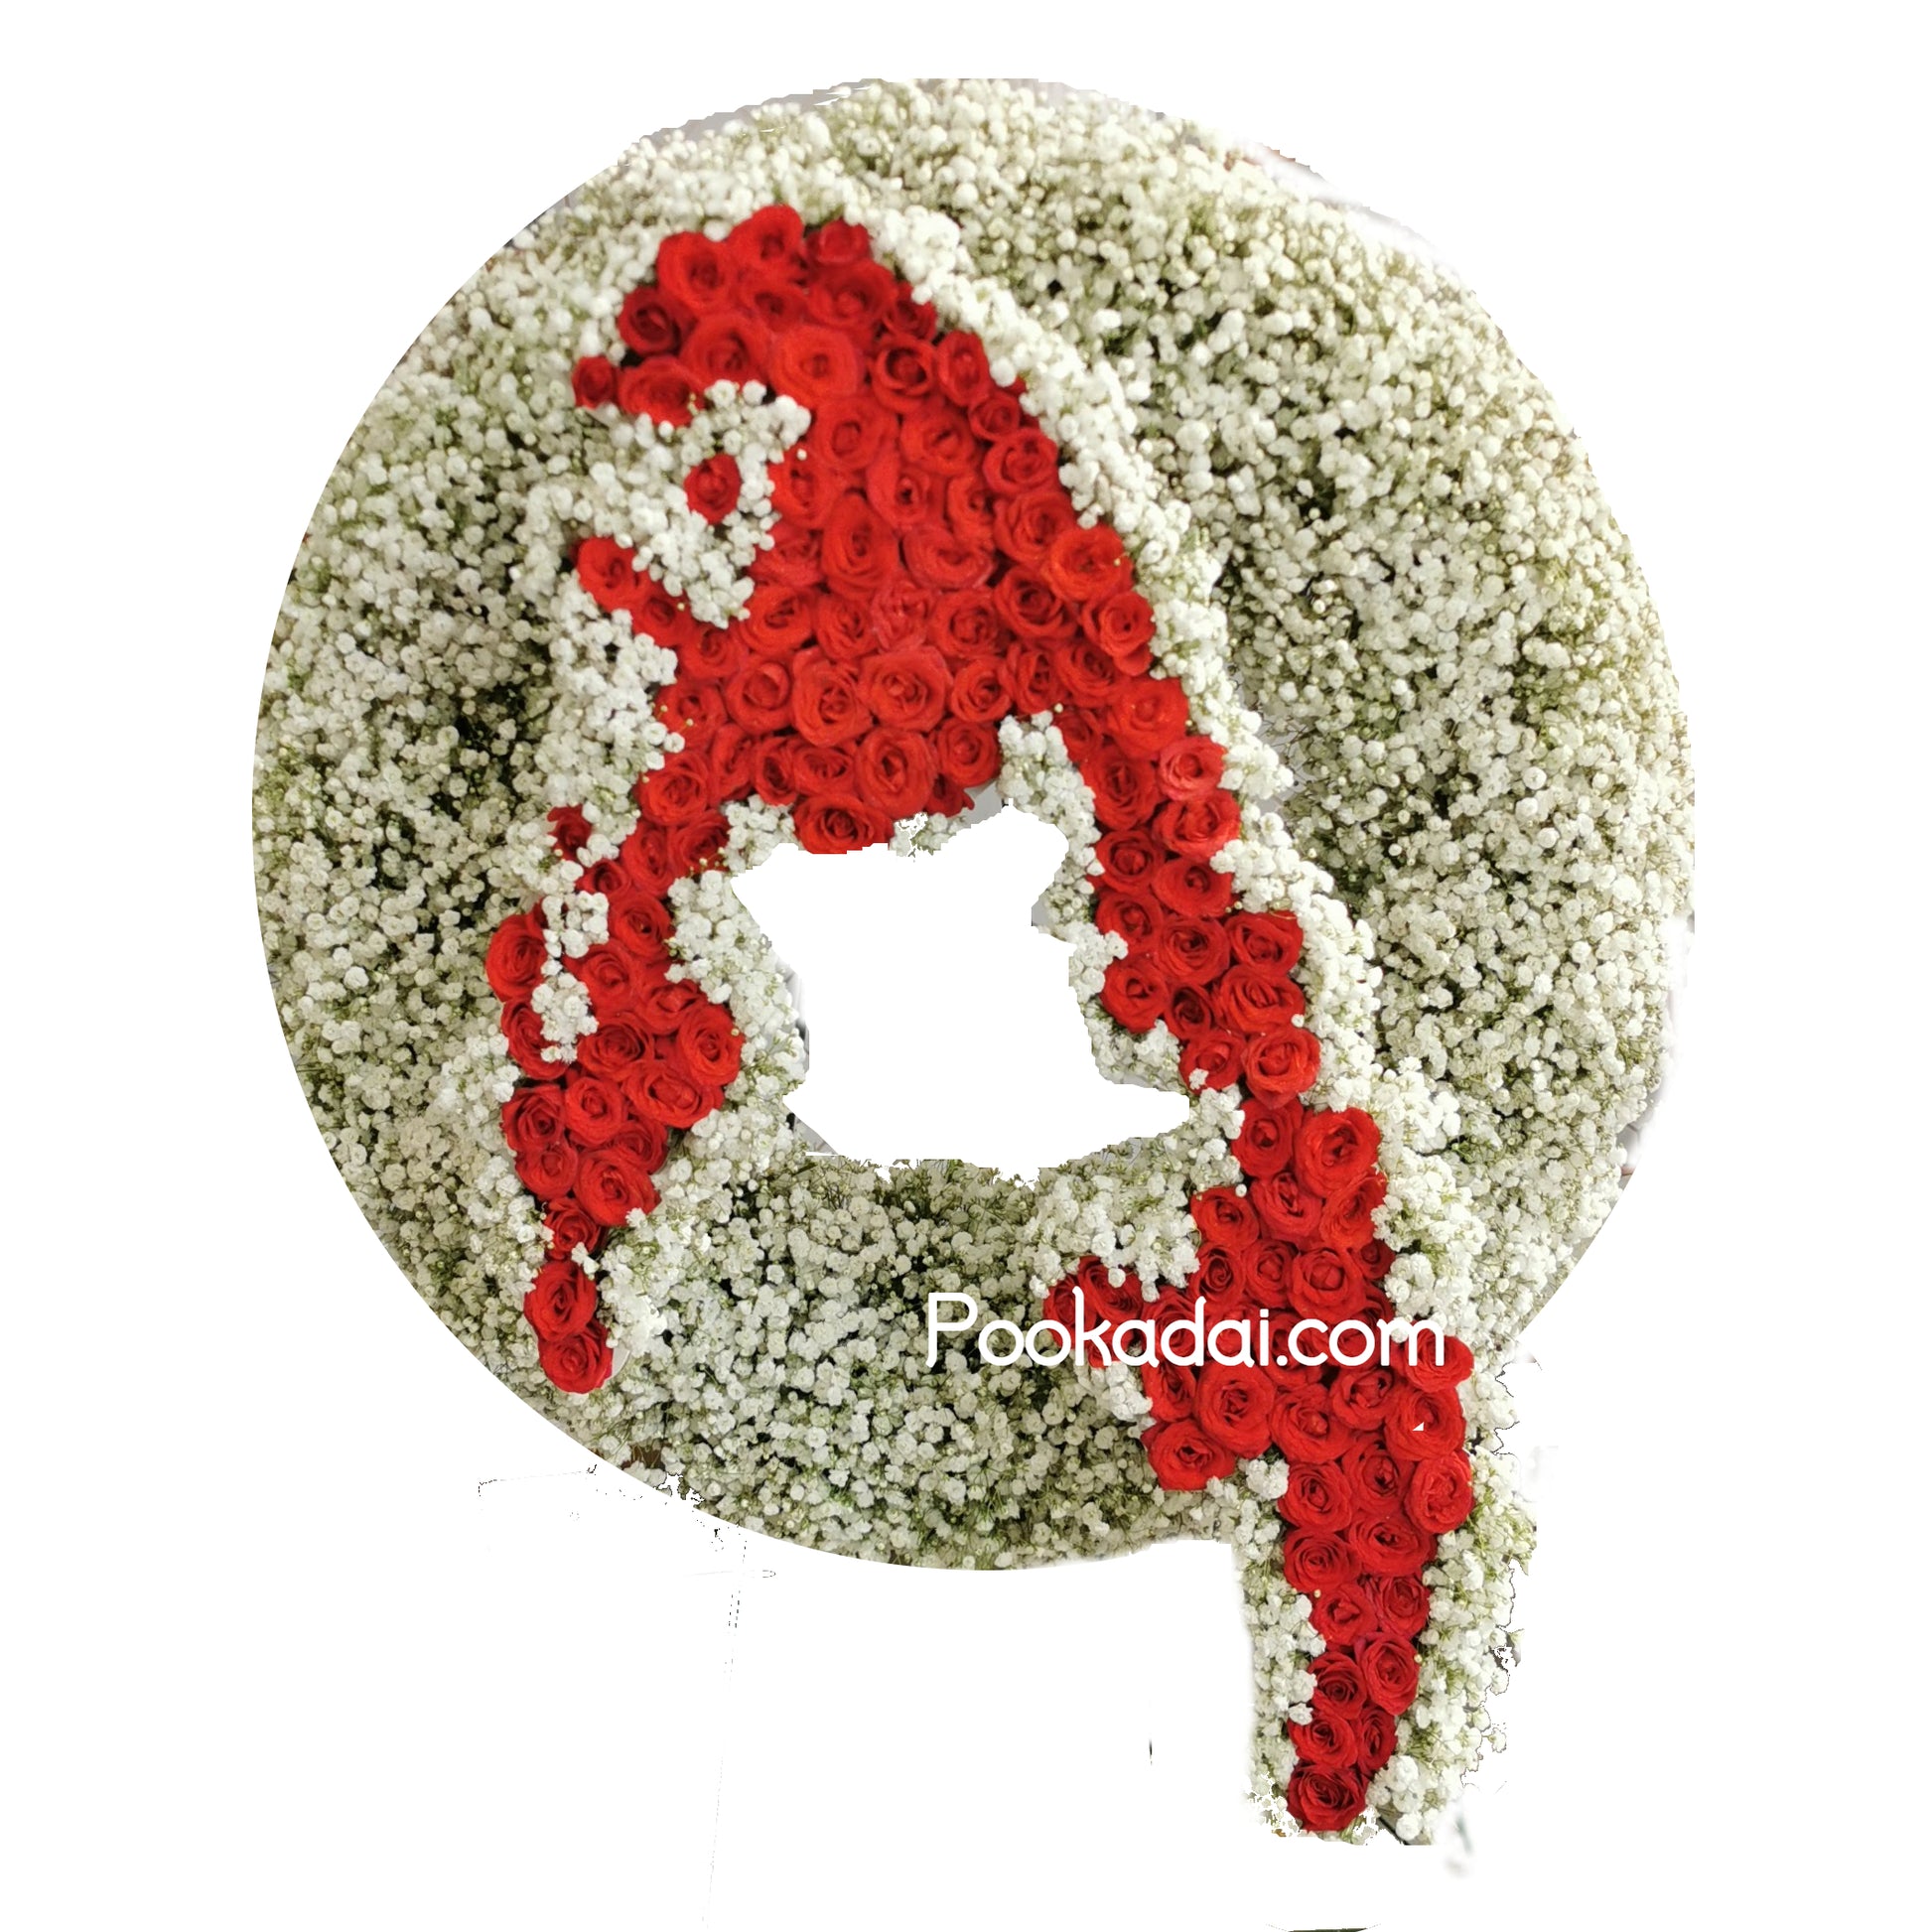 Customized Funeral Wreaths- Tamil Eelam - Pookadai Florist Toronto